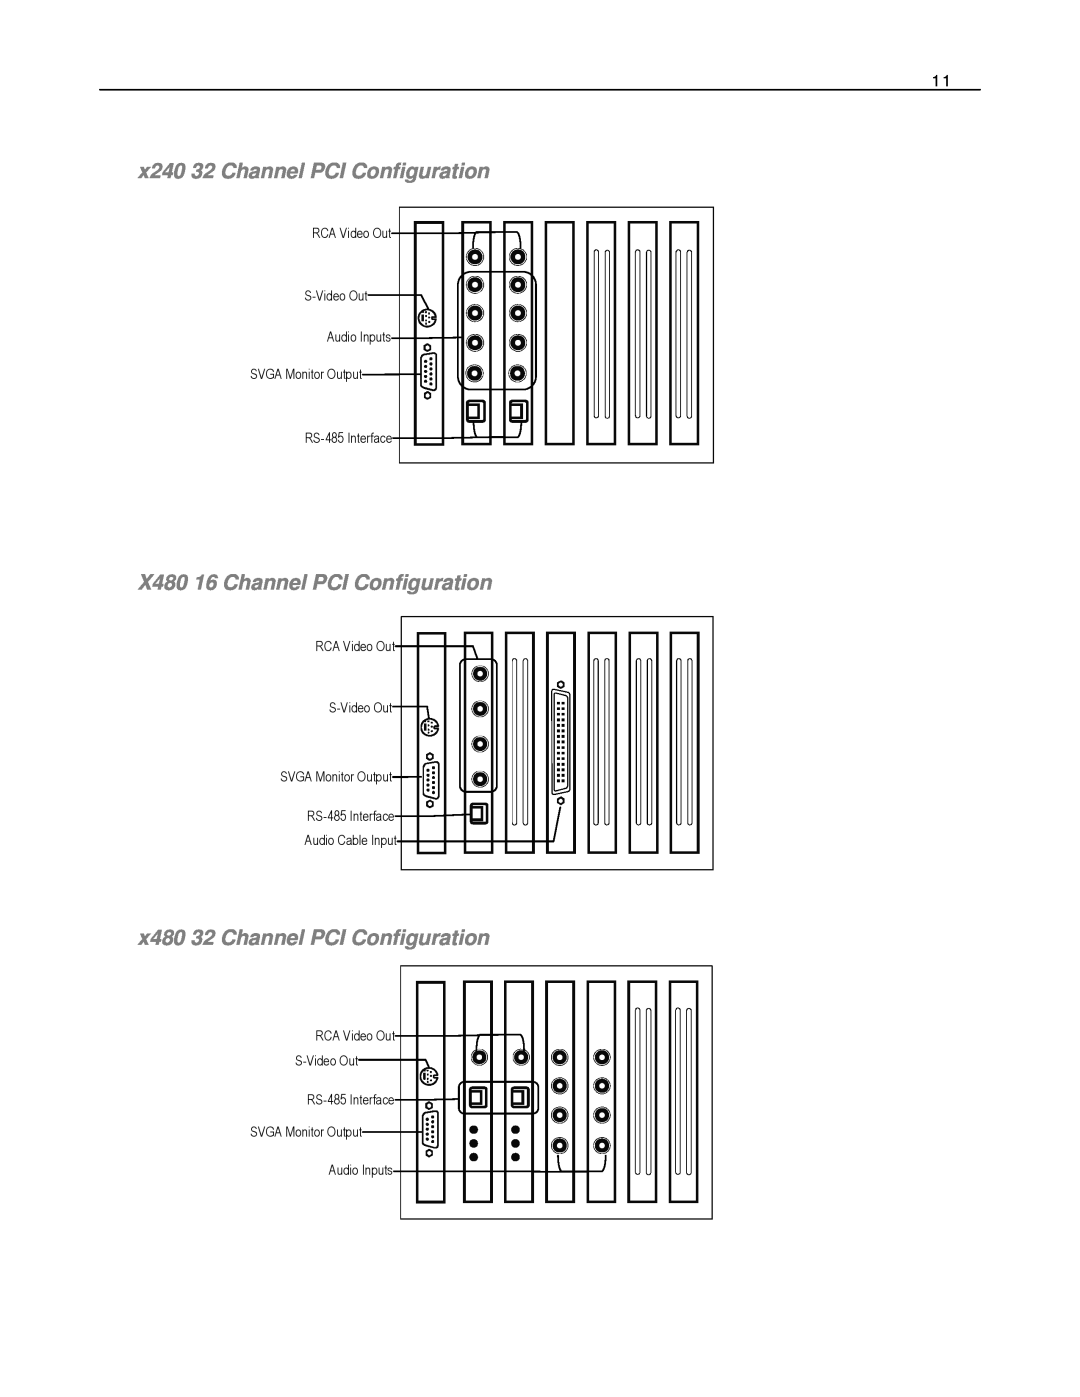 Toshiba EVR16-X x240 32 Channel PCI Configuration, X480 16 Channel PCI Configuration, x480 32 Channel PCI Configuration 